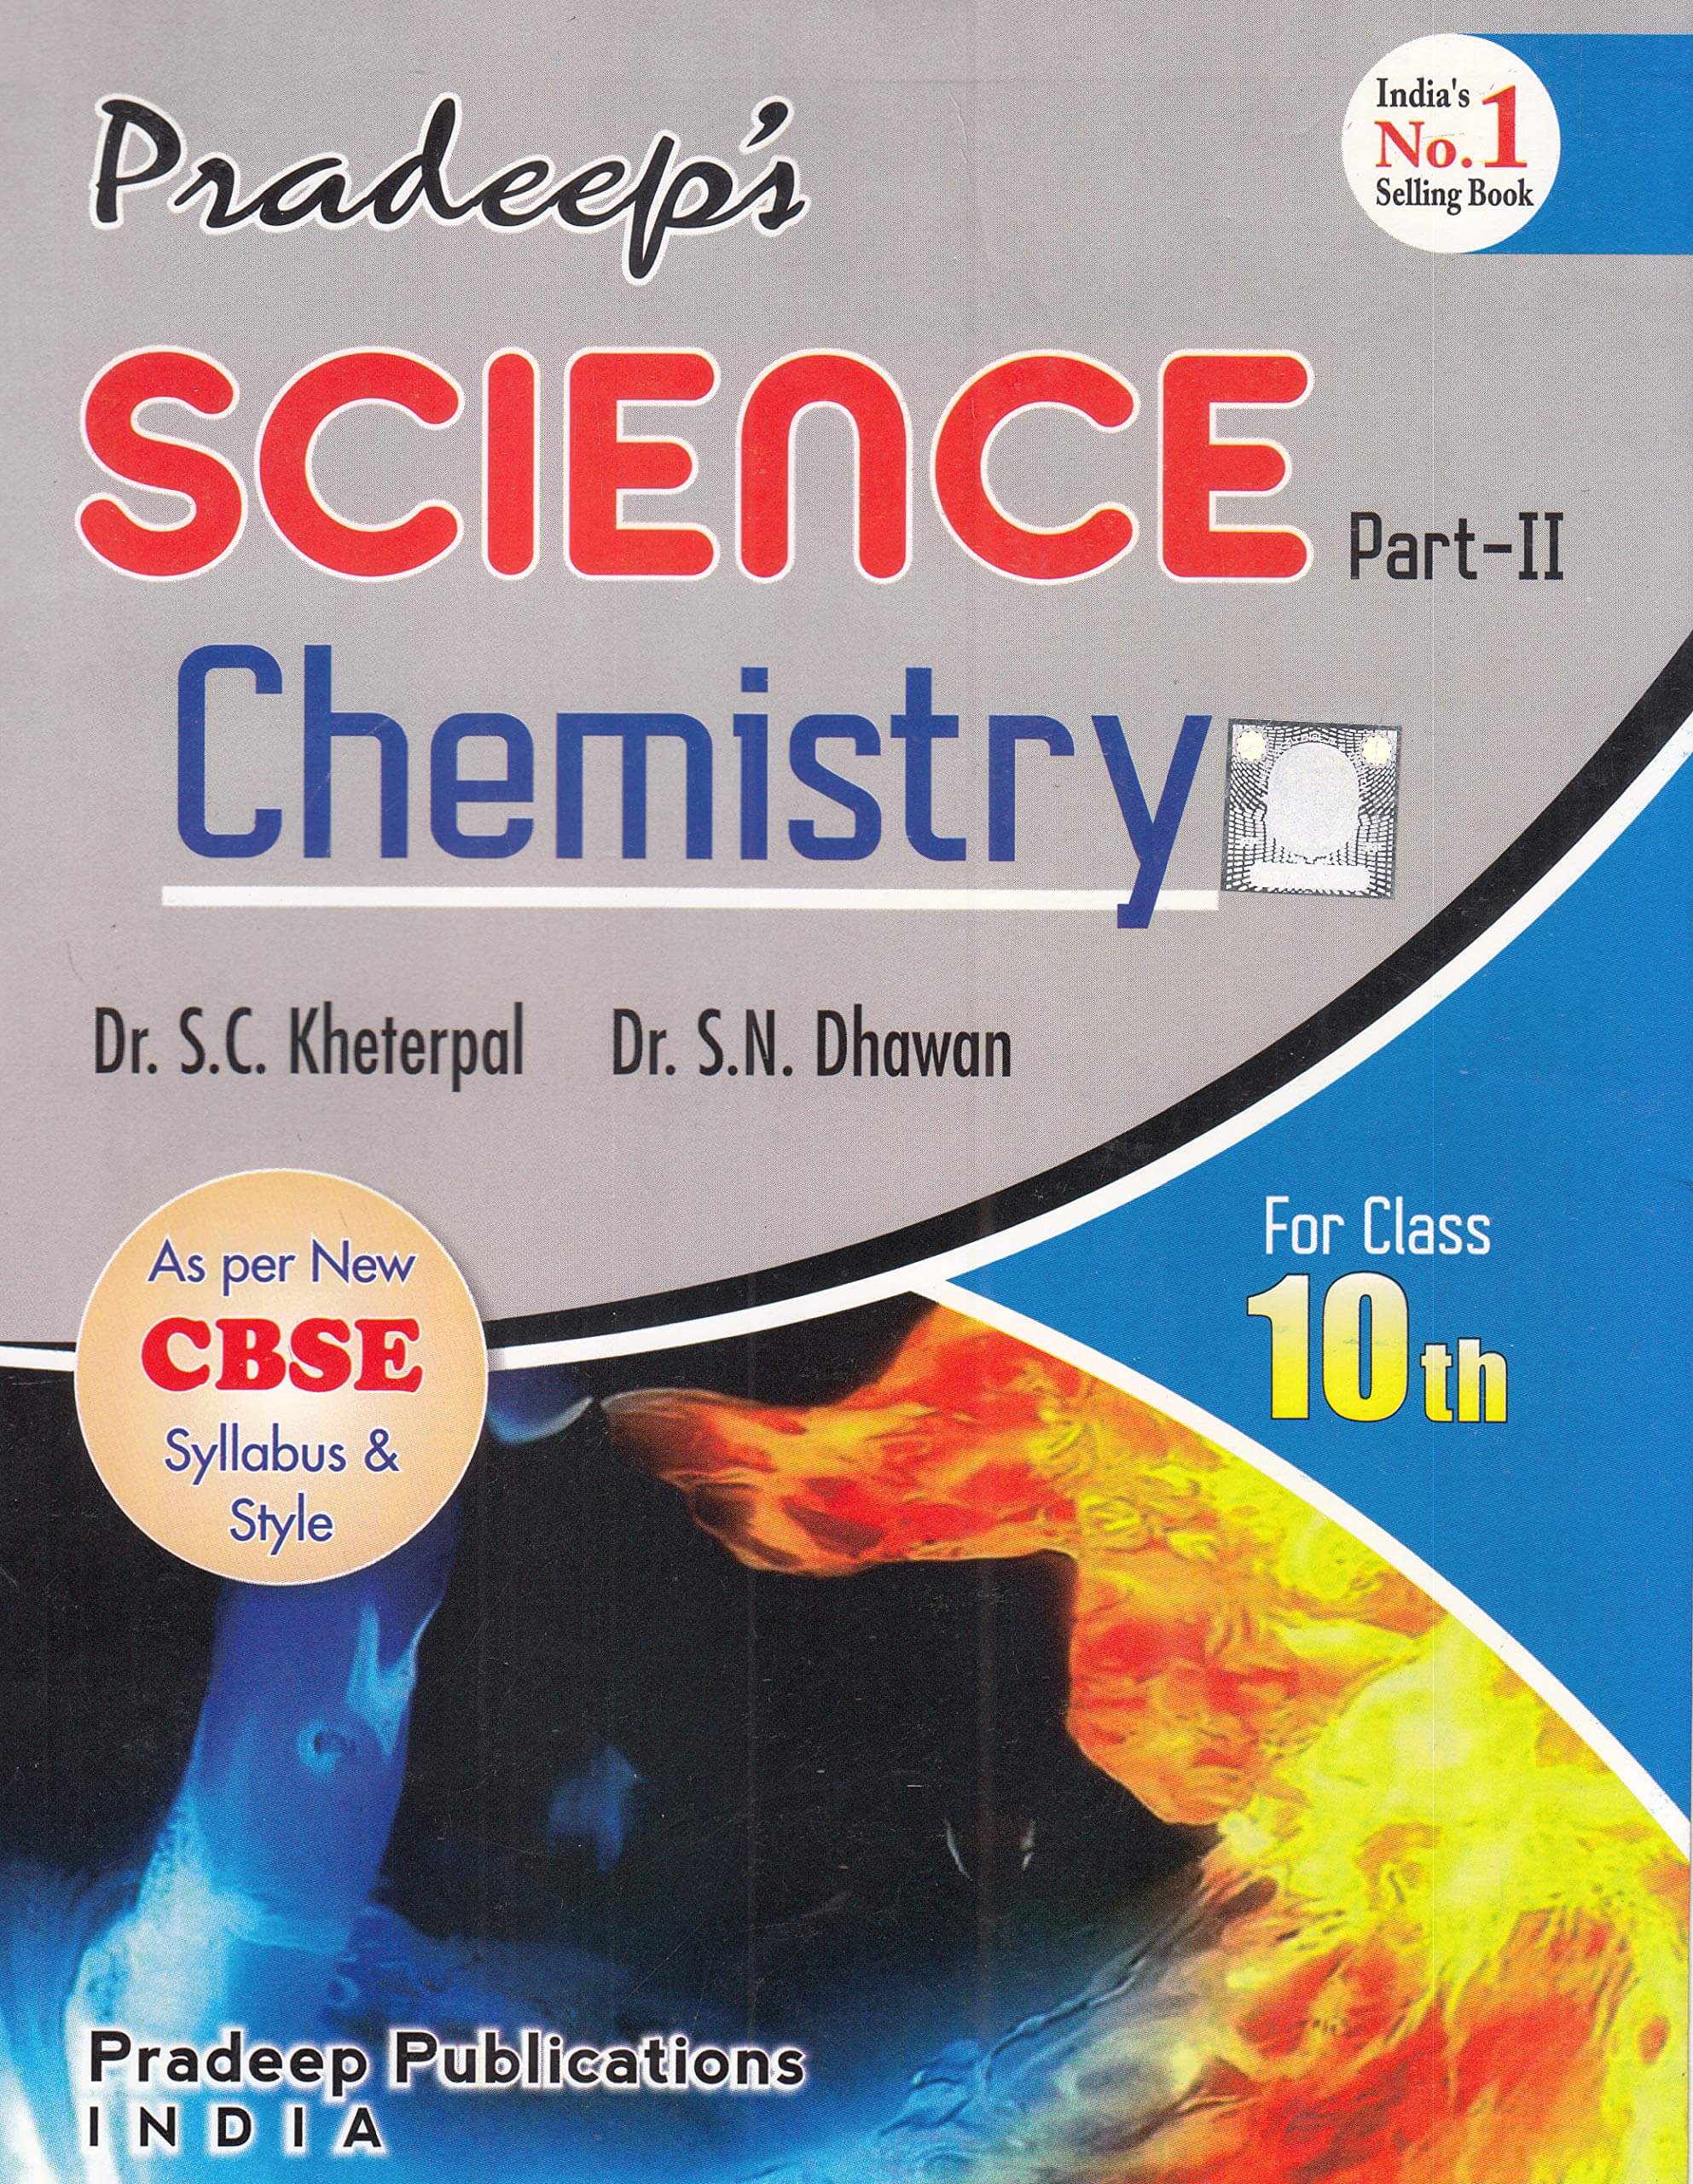 Pradeep class 10th Chemistry